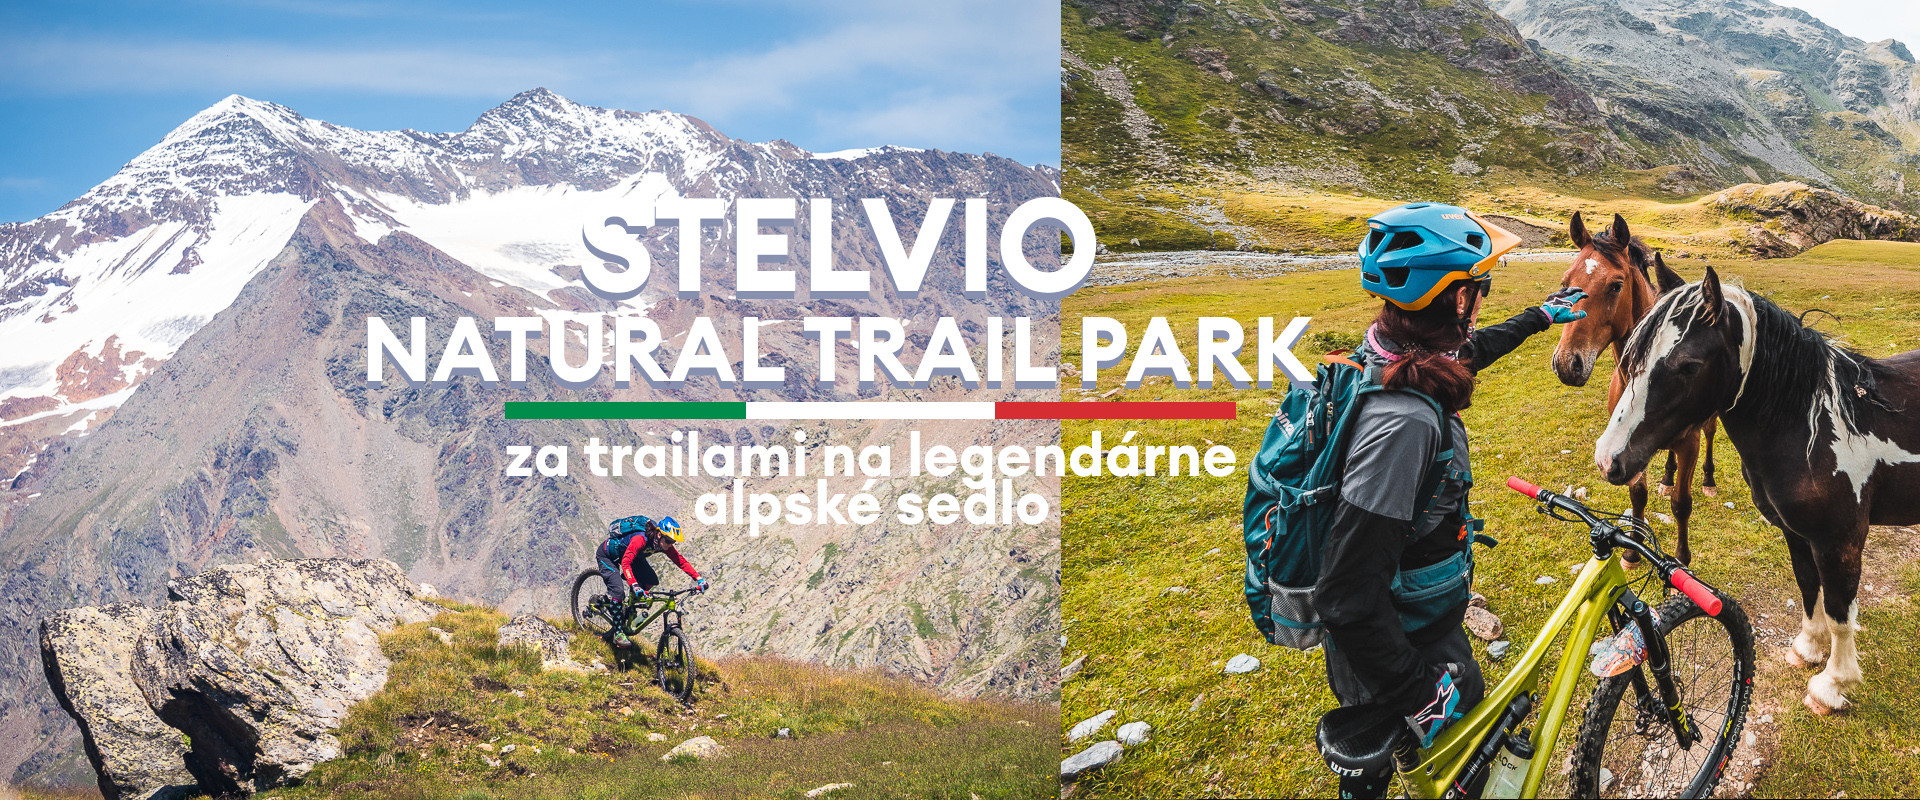 Stelvio Natural trail park a Bormio bikepark - za trailami na legendárne alpské sedlo